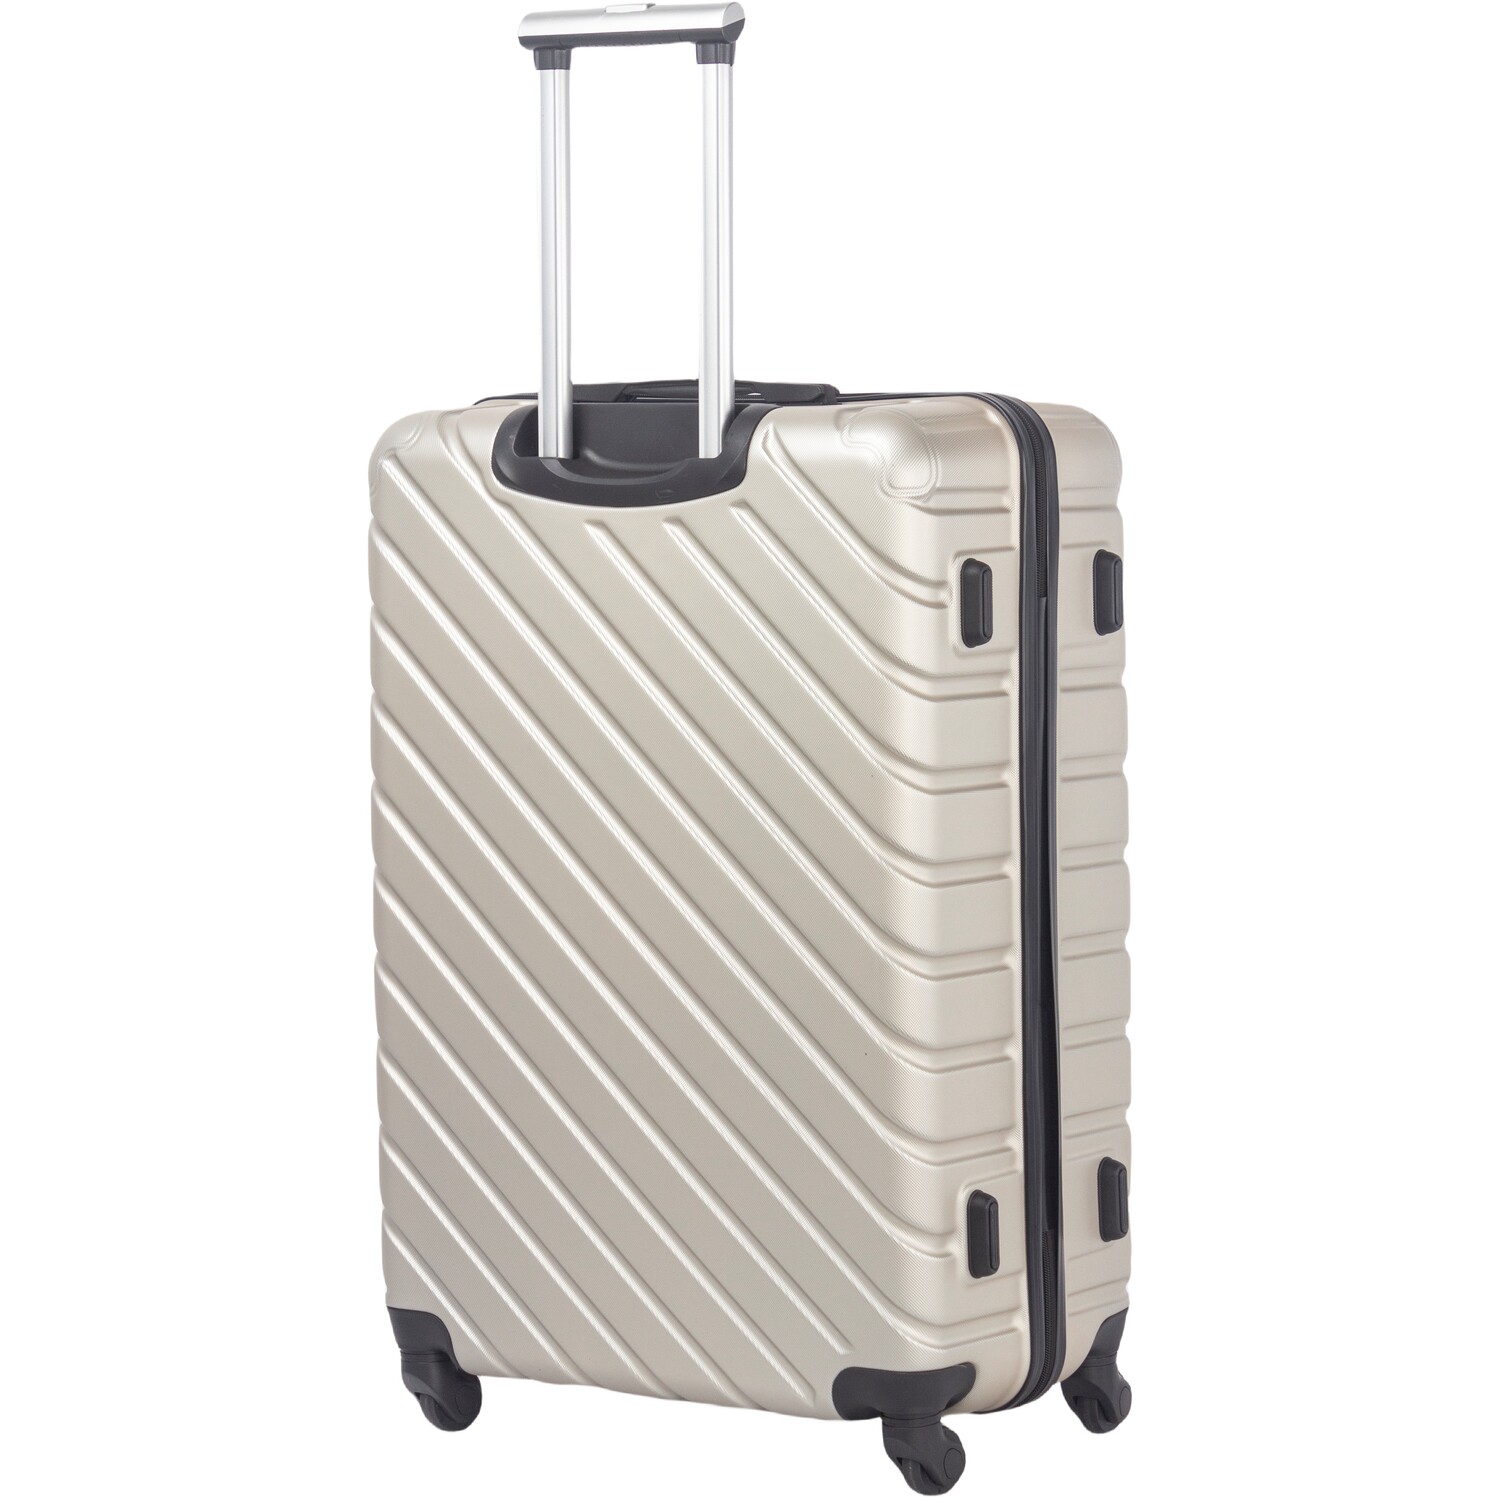 Swift Astral Suitcase - Beige  / Cabin Case Image 3